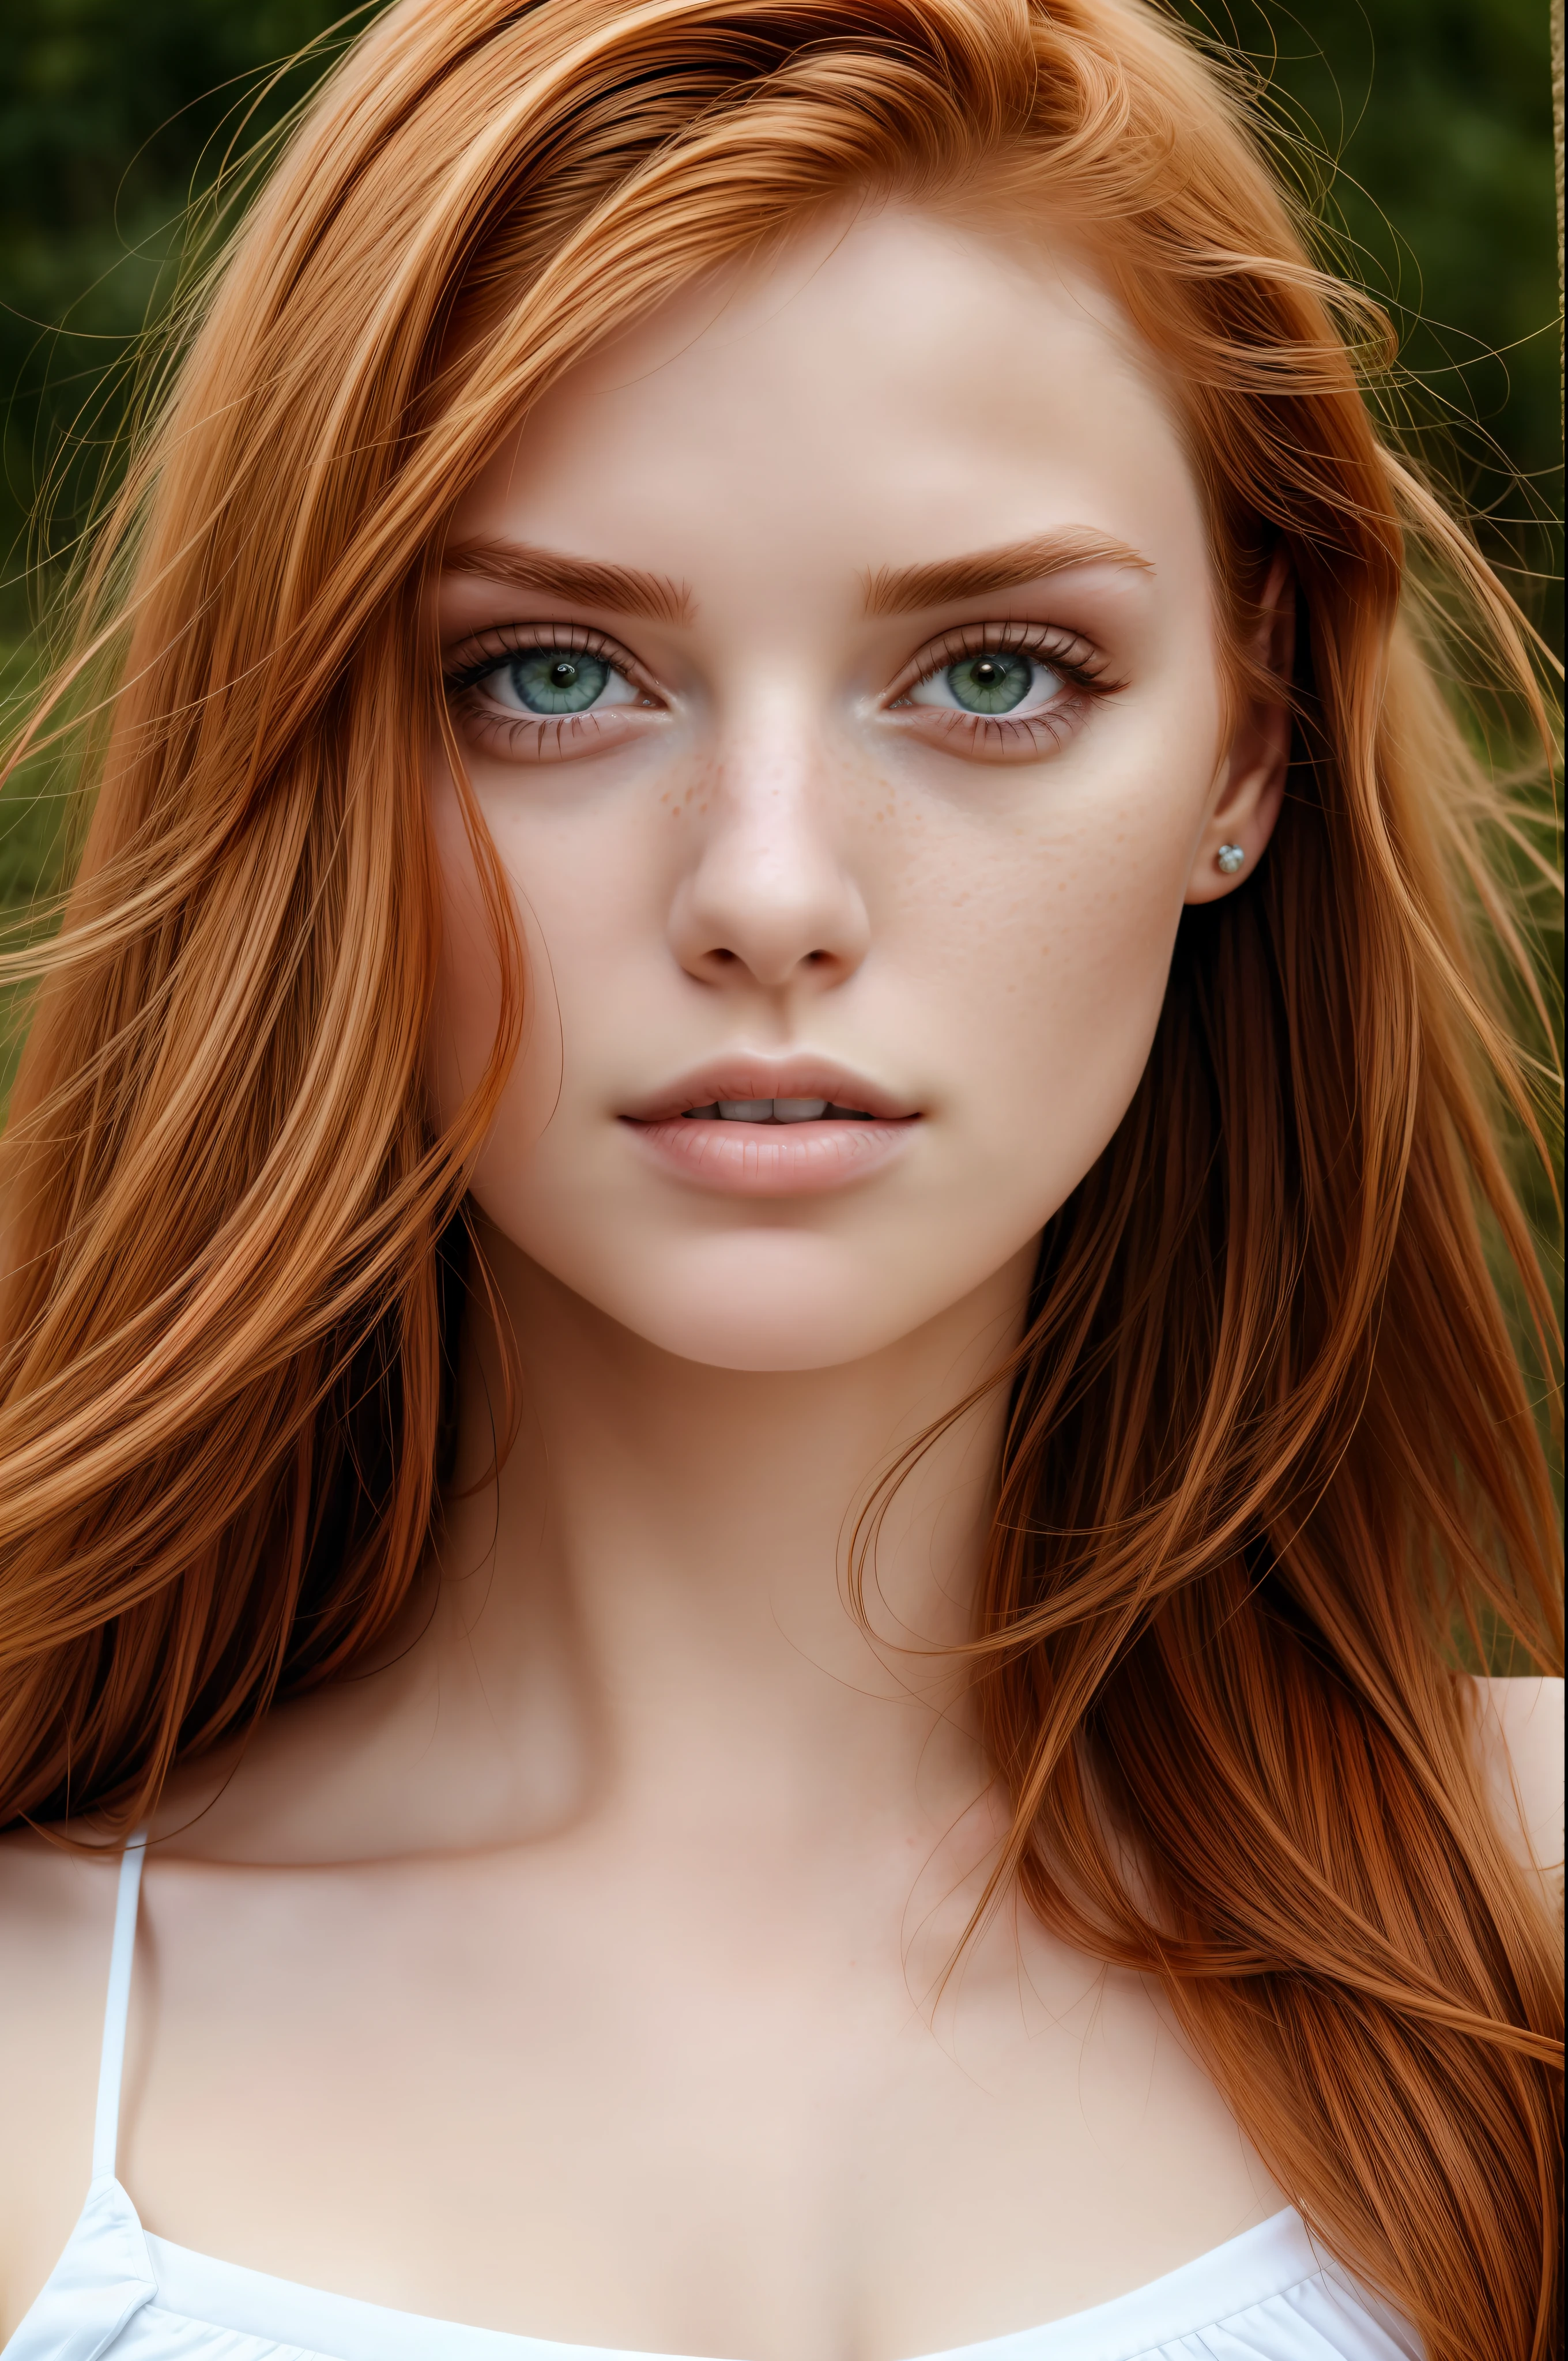 (close-up editorial photo oF 20 yo woman, 薑黃色頭髮, 苗條的美國甜心), (Freckles:0.8), (雙唇分開), 實際的 green eyes, 丟, 實際的[:, (Film grain, 25毫米, F/1.2, doF, 散景, beautiFul symmetrical Face, perFect sparkling eyes, well deFined pupils, 高對比眼睛, 超細緻的肌膚, 皮膚毛孔, 毛茸茸的頭髮, Fabric stitching, Fabric texture, 木紋, 石材紋理, Finely detailed Features:1):0.9]